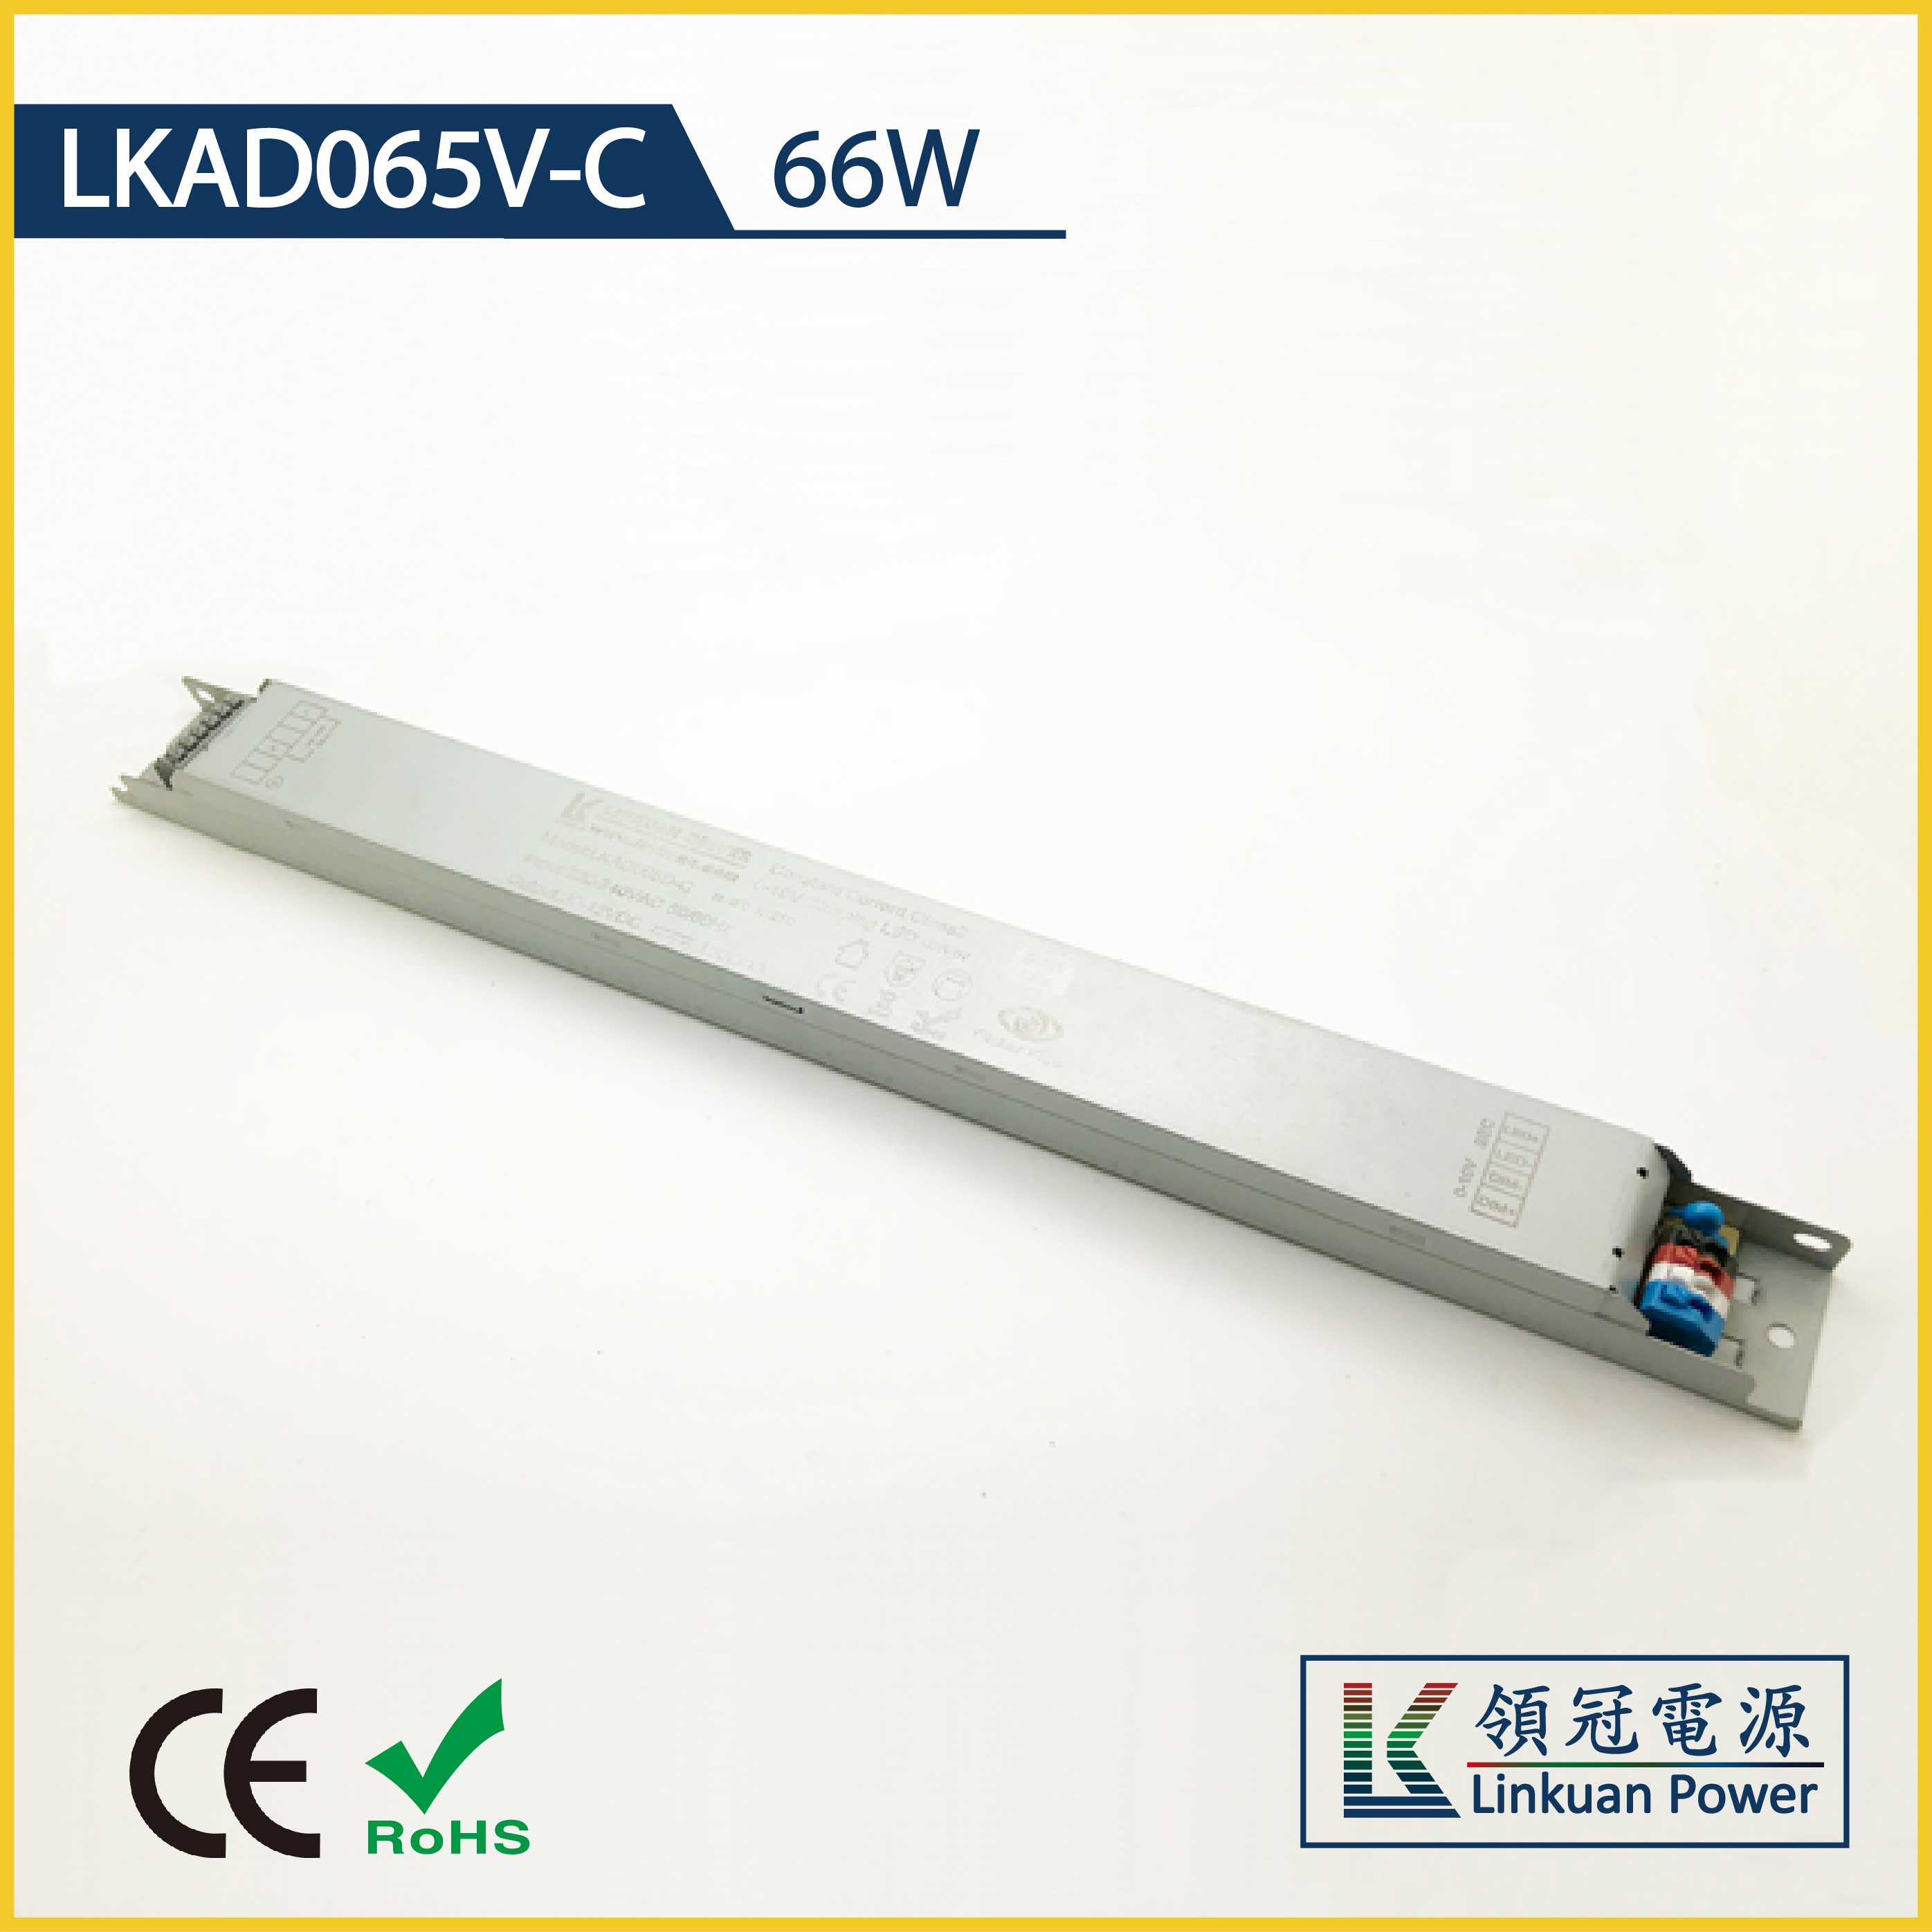 LKAD065V-C 66W 12/24V 5.5A/2.7A Linear Lamp 0-10V dimming  led driver